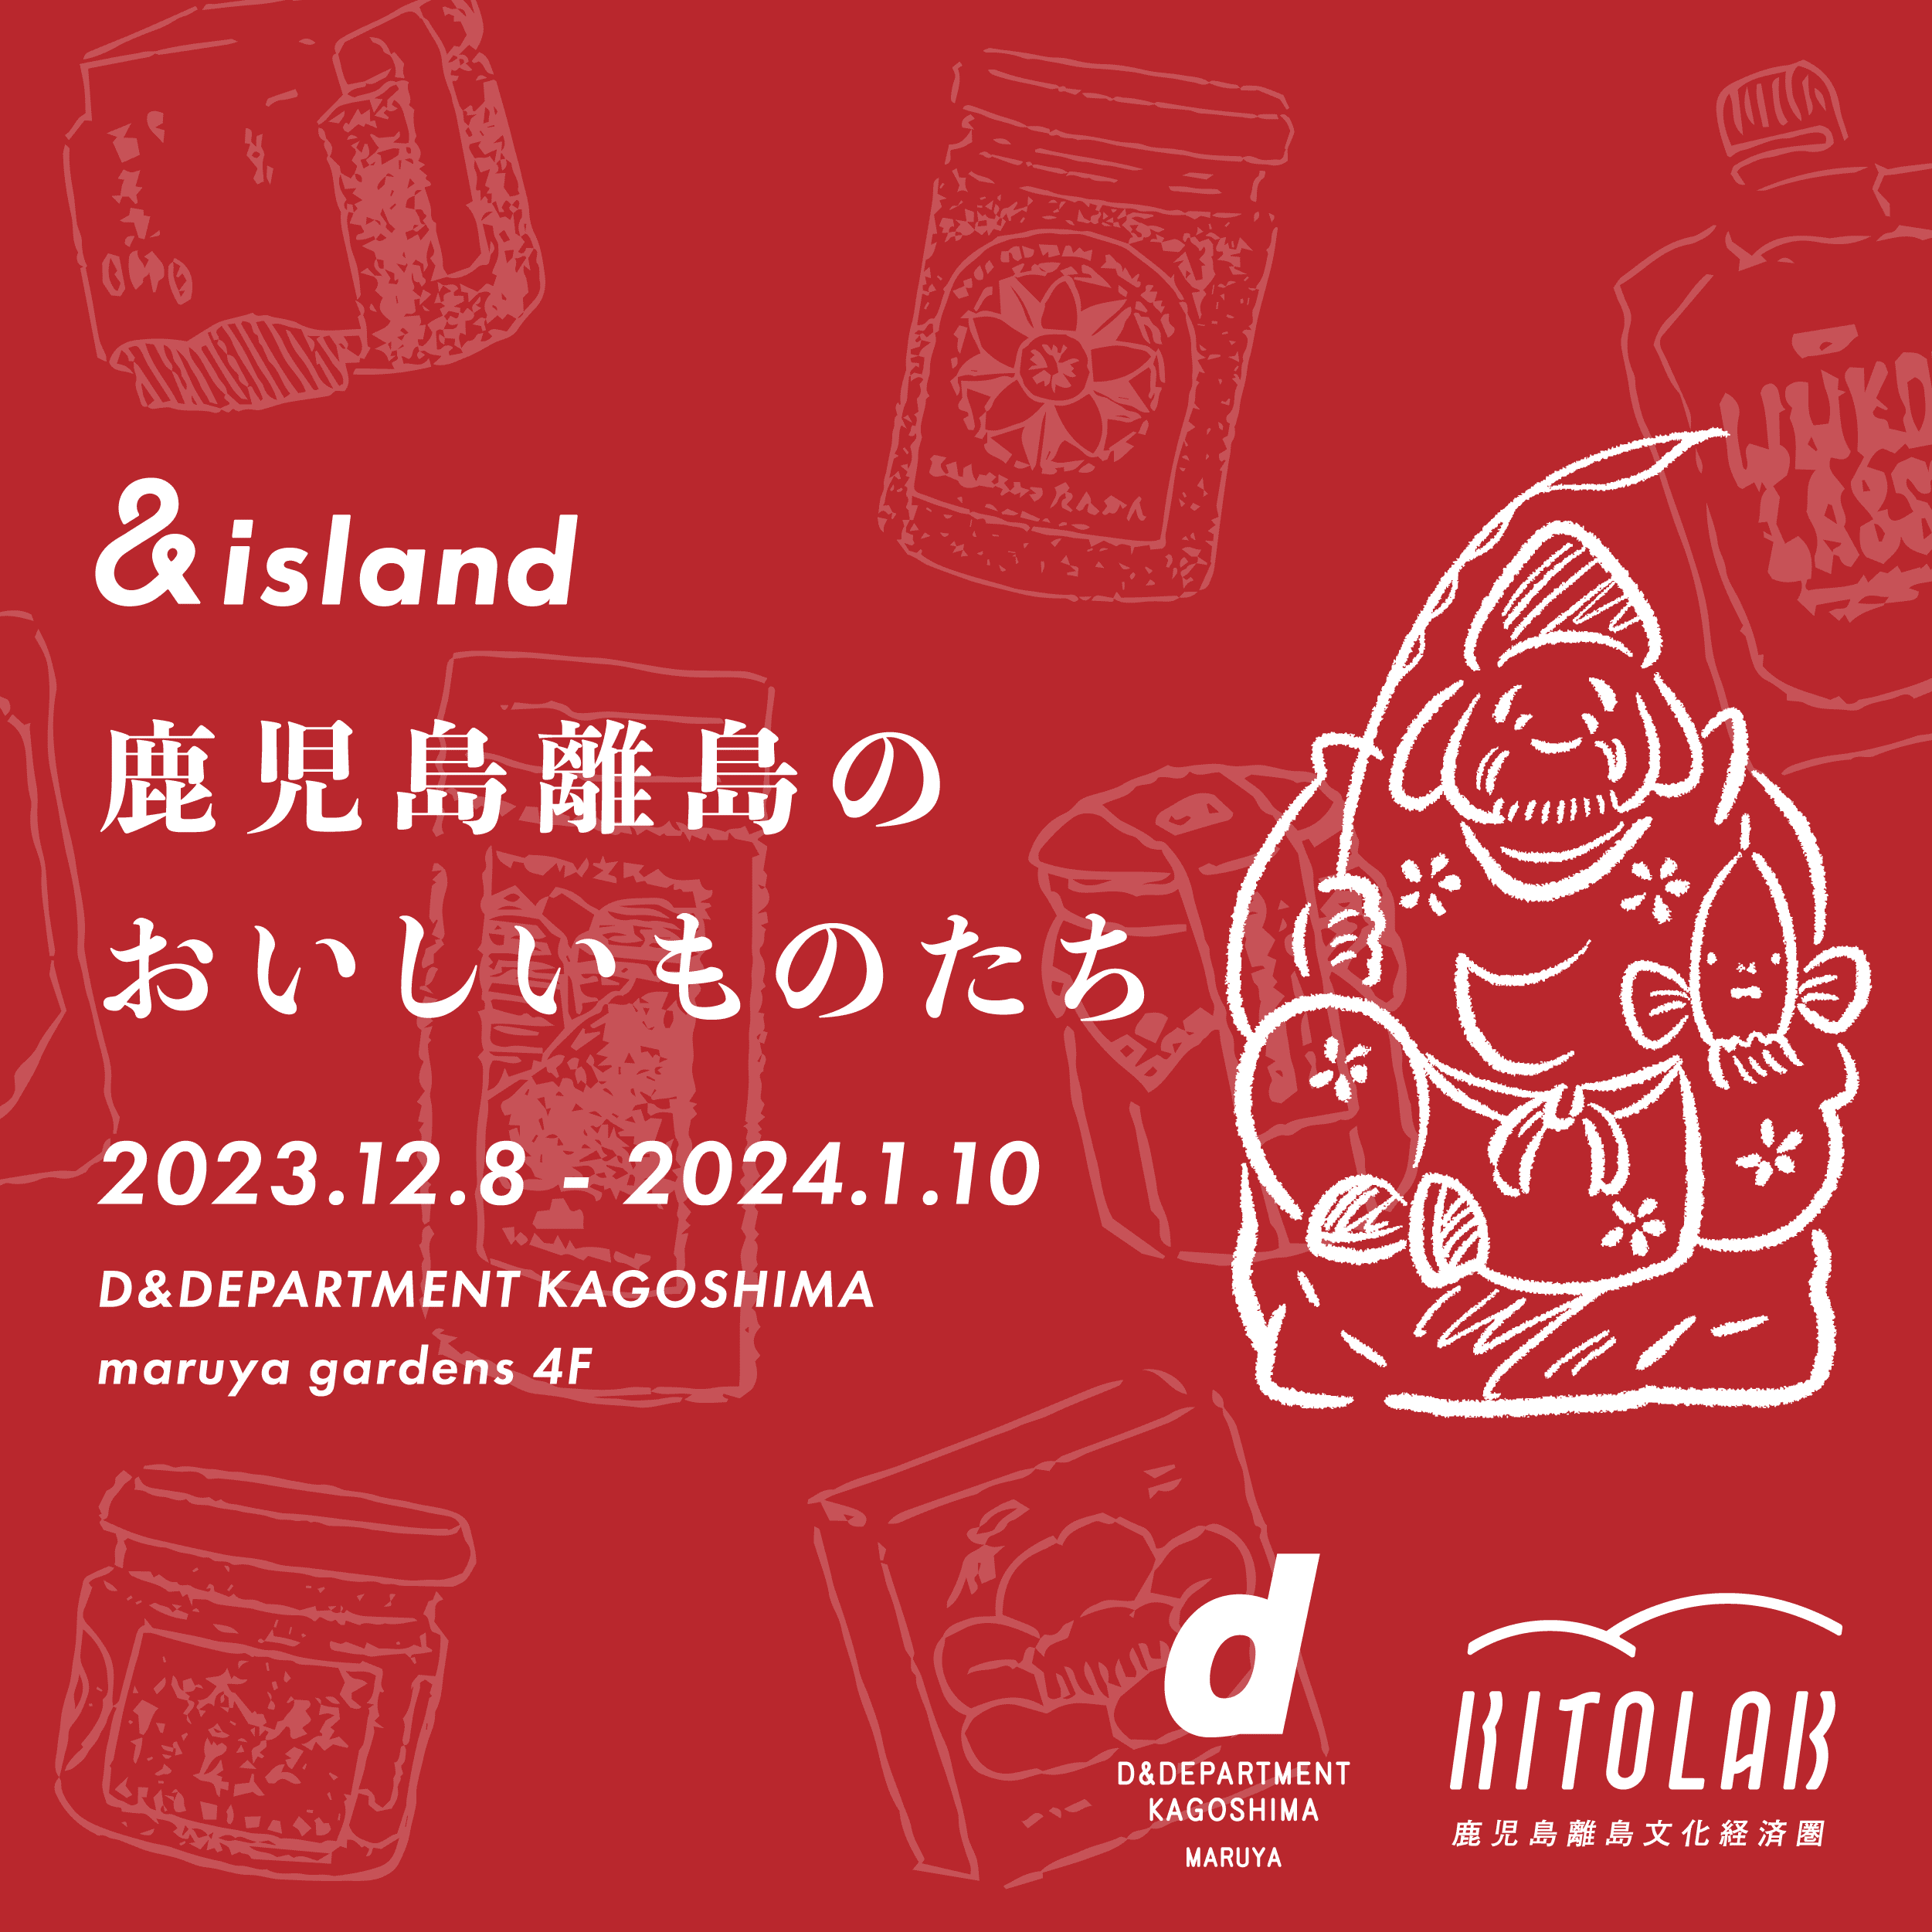 【EVENT】D&DEPARTMENT KAGOSHIMA にて「&island POPUP STORE 」”かご島離島のおいしいものたち”を開催いたします